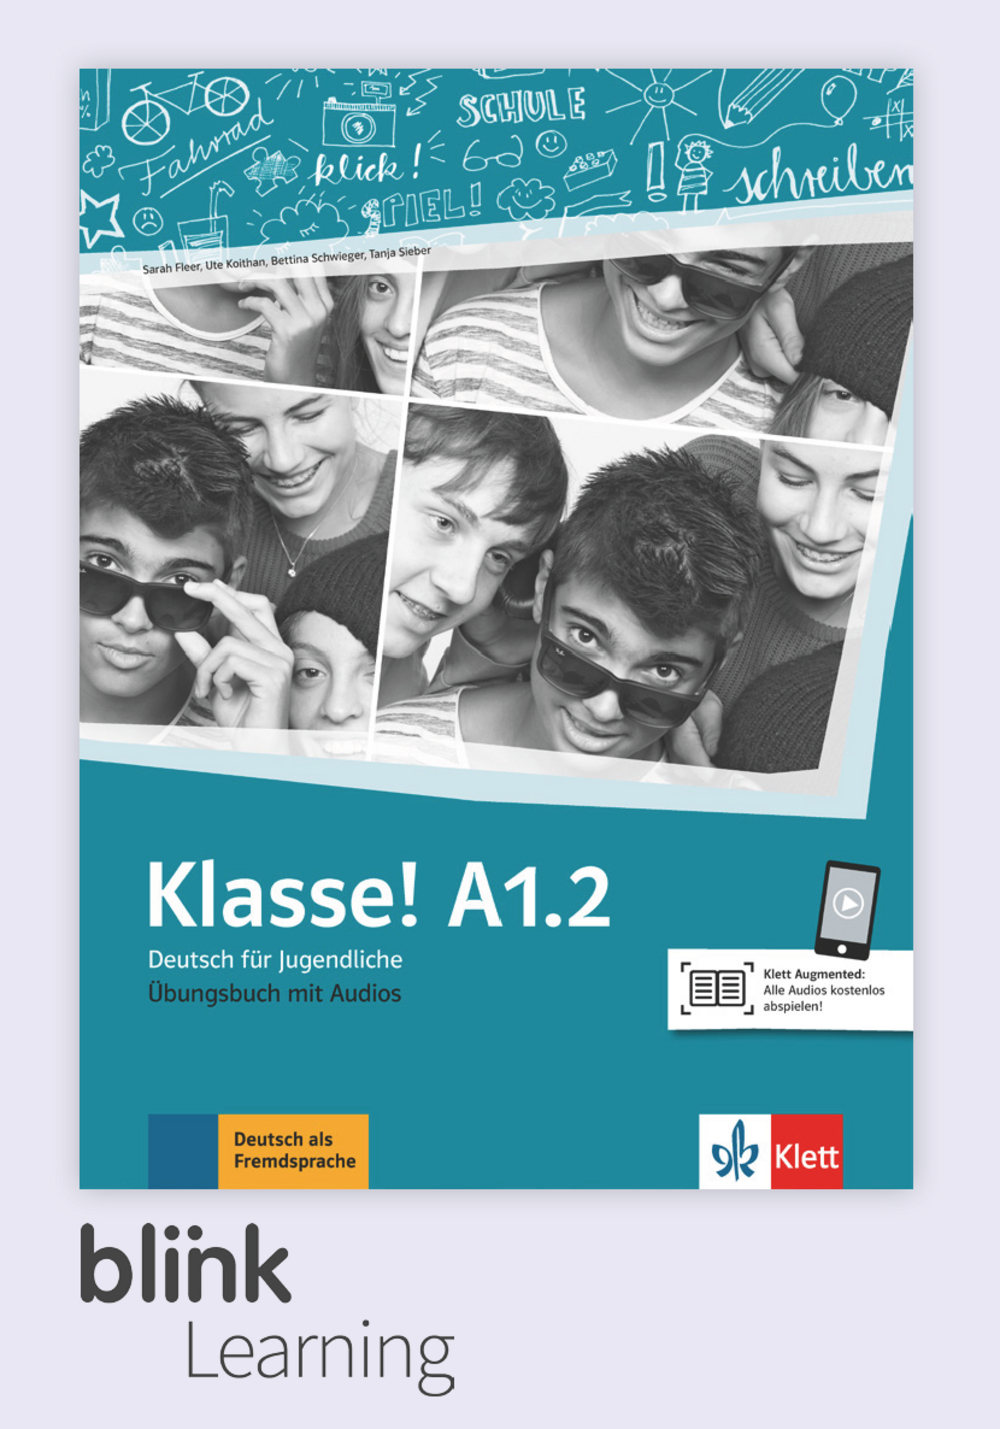 Klasse! A1.2 Digital Ubungsbuch fur Unterrichtende / Цифровая рабочая тетрадь для учителя